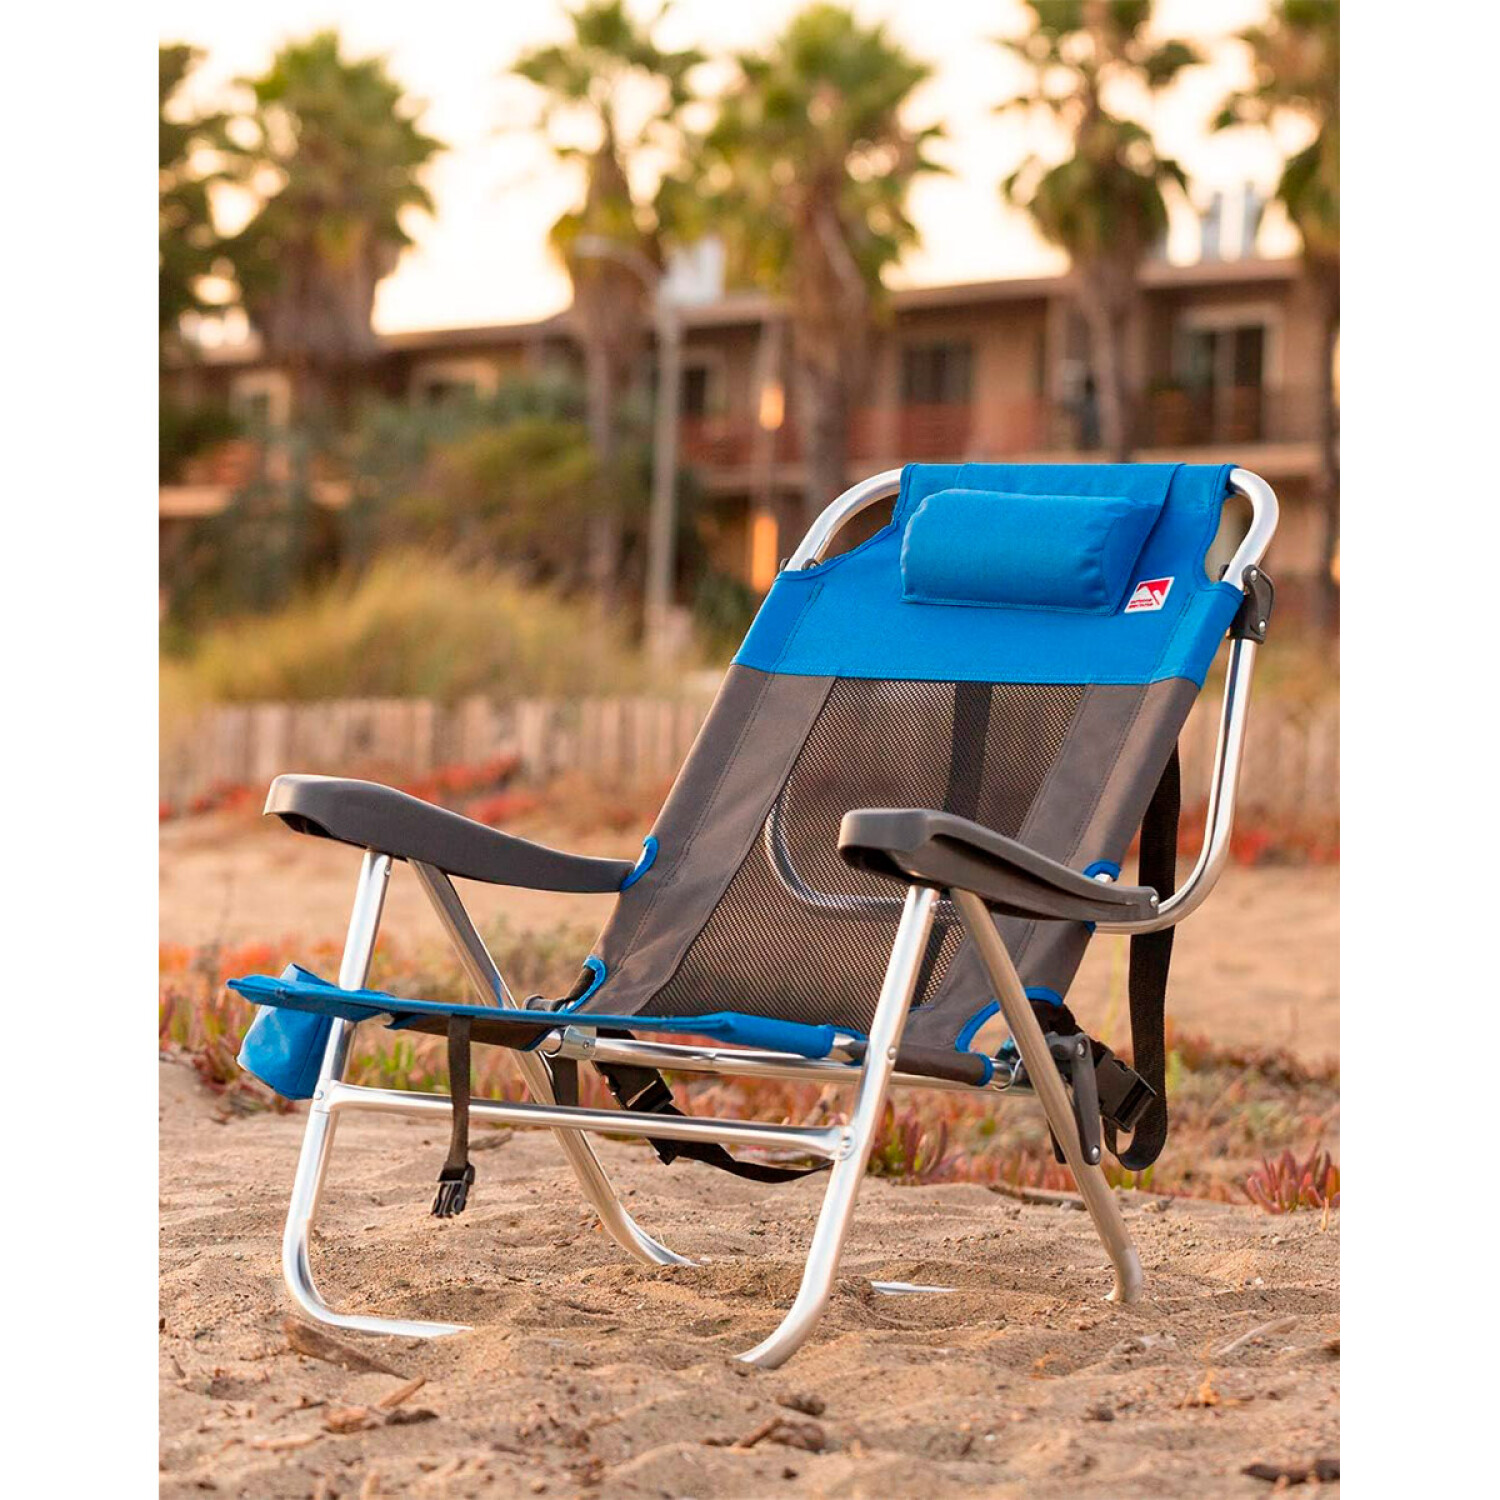 Juego de 2 sillas de playa sillas de playa sillas plegables